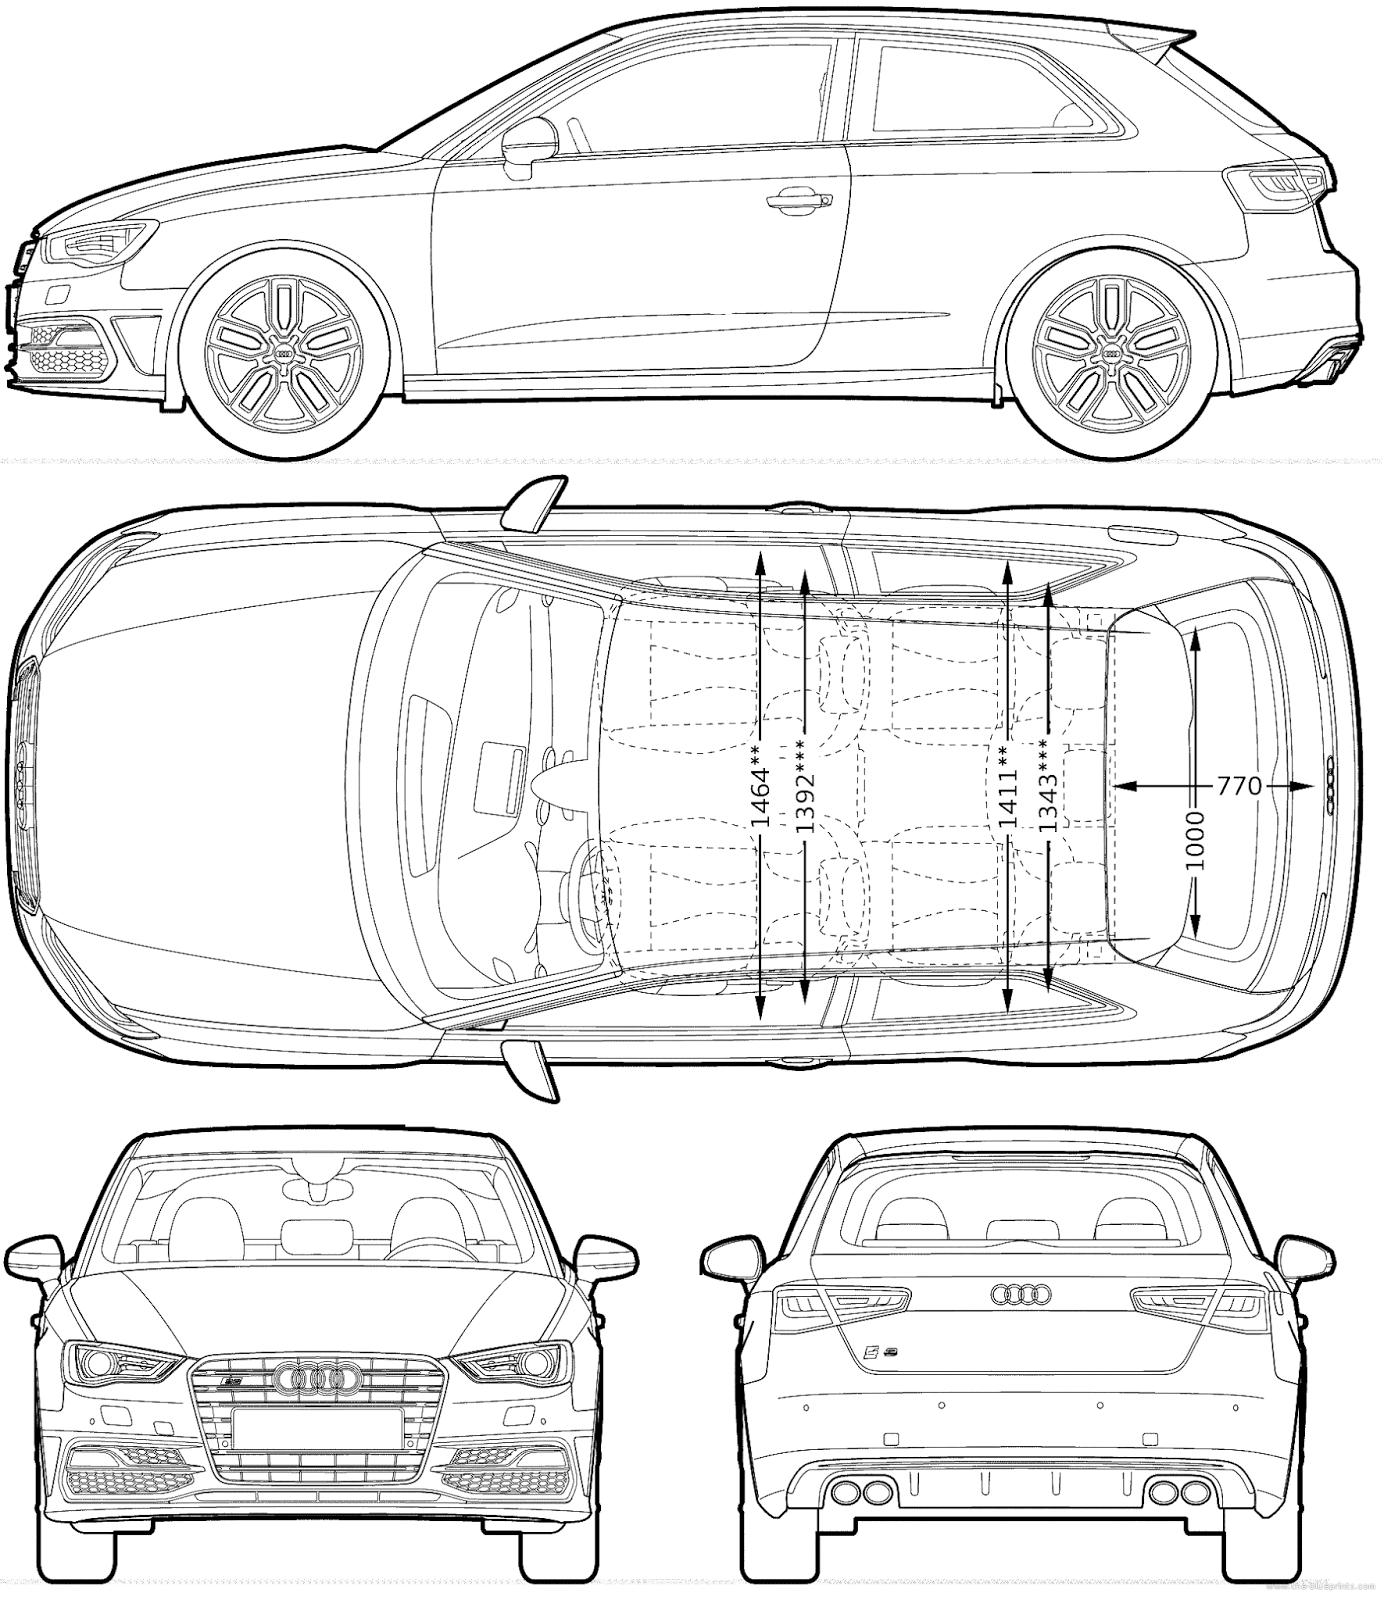 Audi a3 Blueprint. Audi a6 Blueprint. Audi a3 2012 Blueprint. Audi a3 8l чертеж. Референс машины